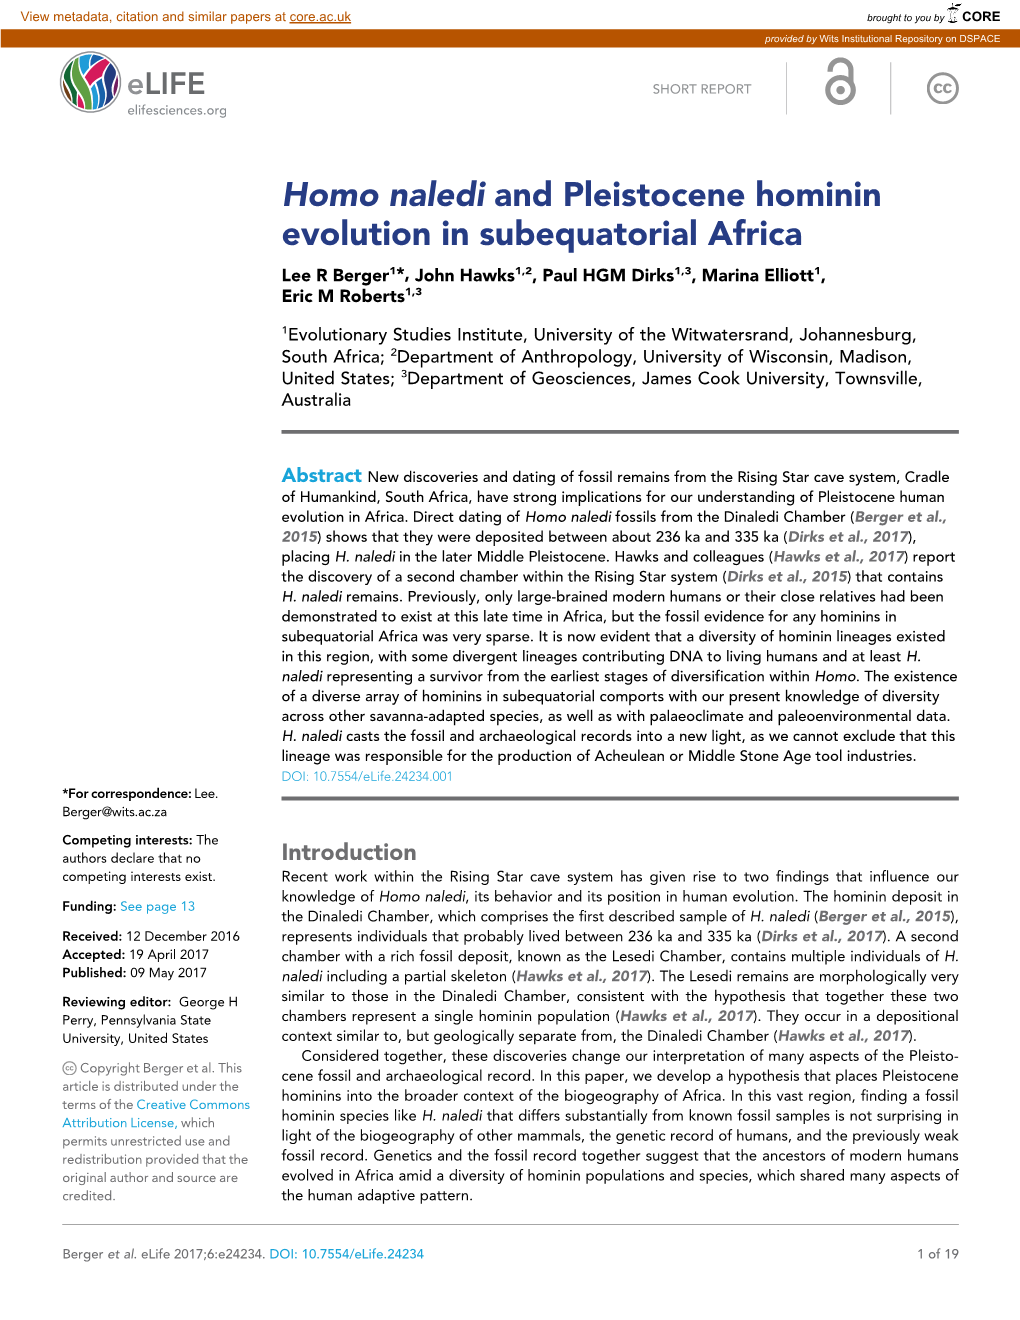 Homo Naledi and Pleistocene Hominin Evolution in Subequatorial Africa Lee R Berger1*, John Hawks1,2, Paul HGM Dirks1,3, Marina Elliott1, Eric M Roberts1,3